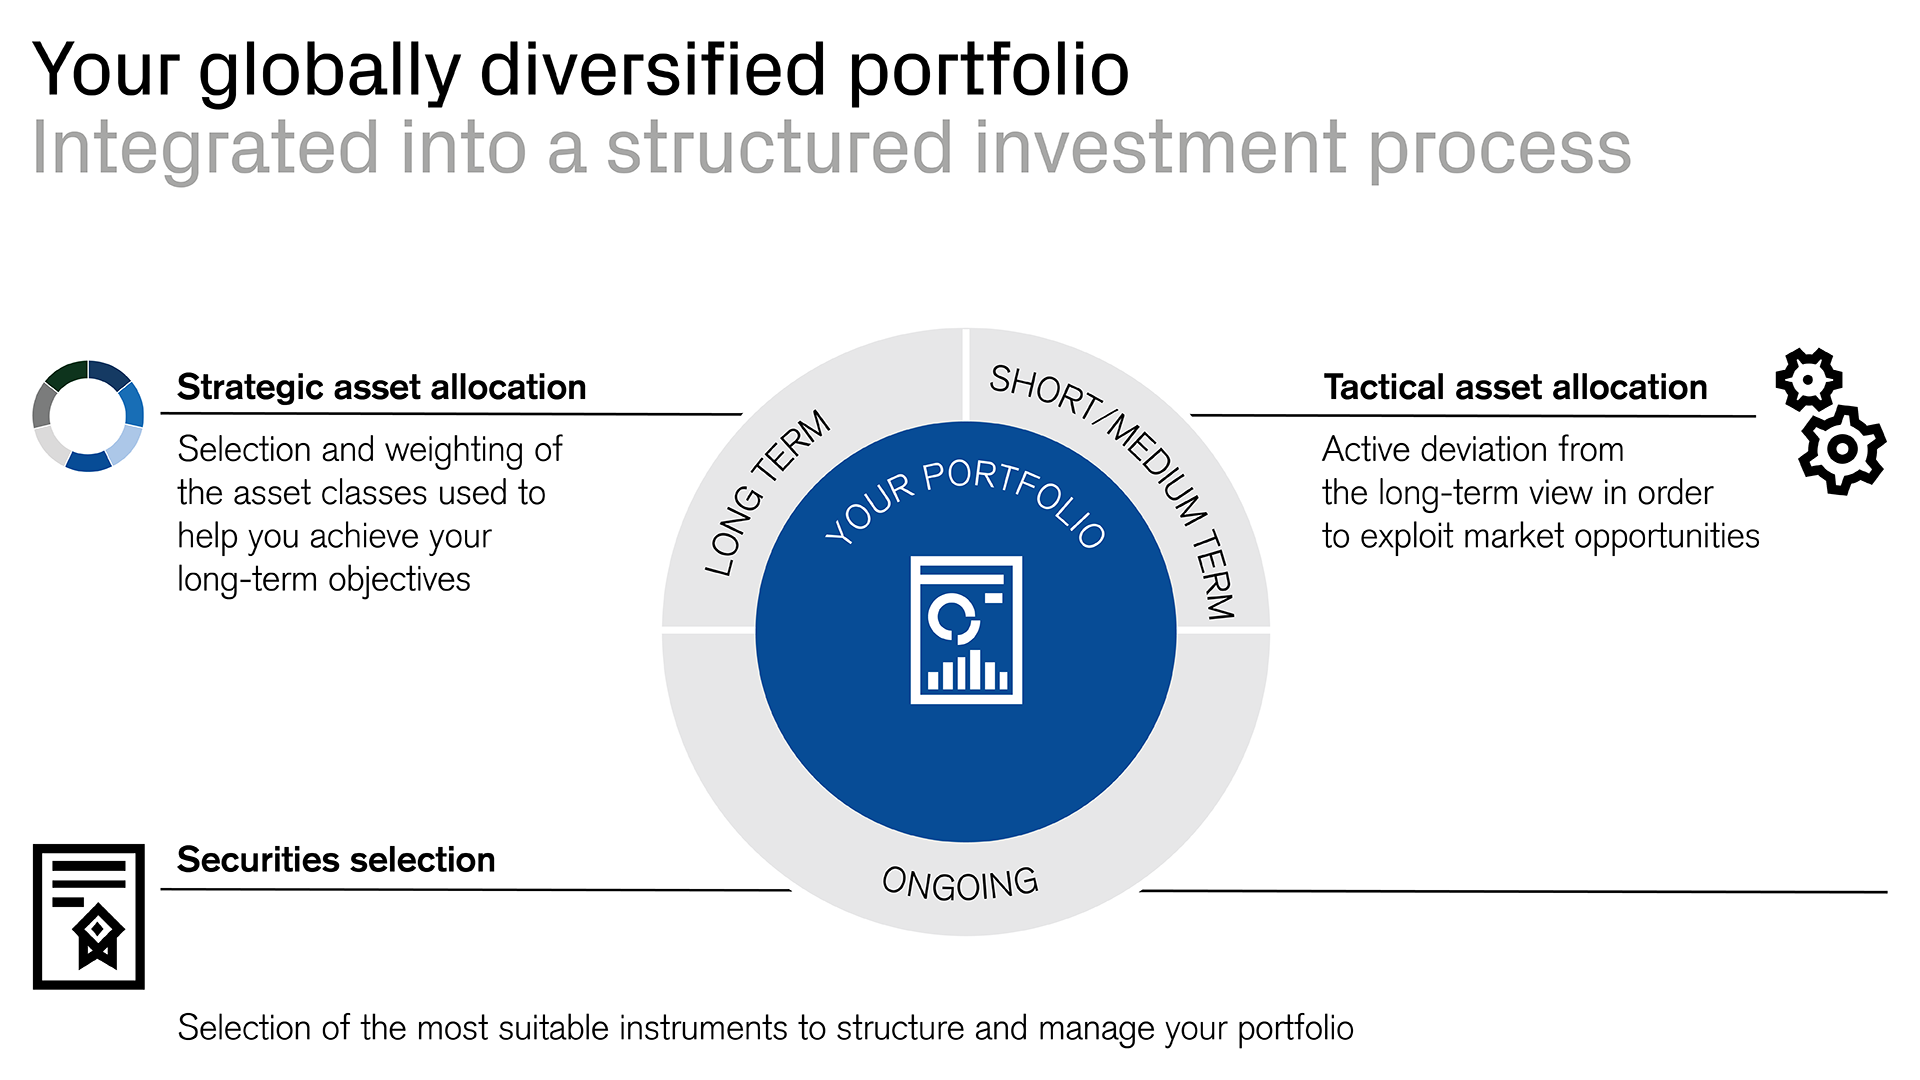 Credit Suisse investment recommendations undergo regular review